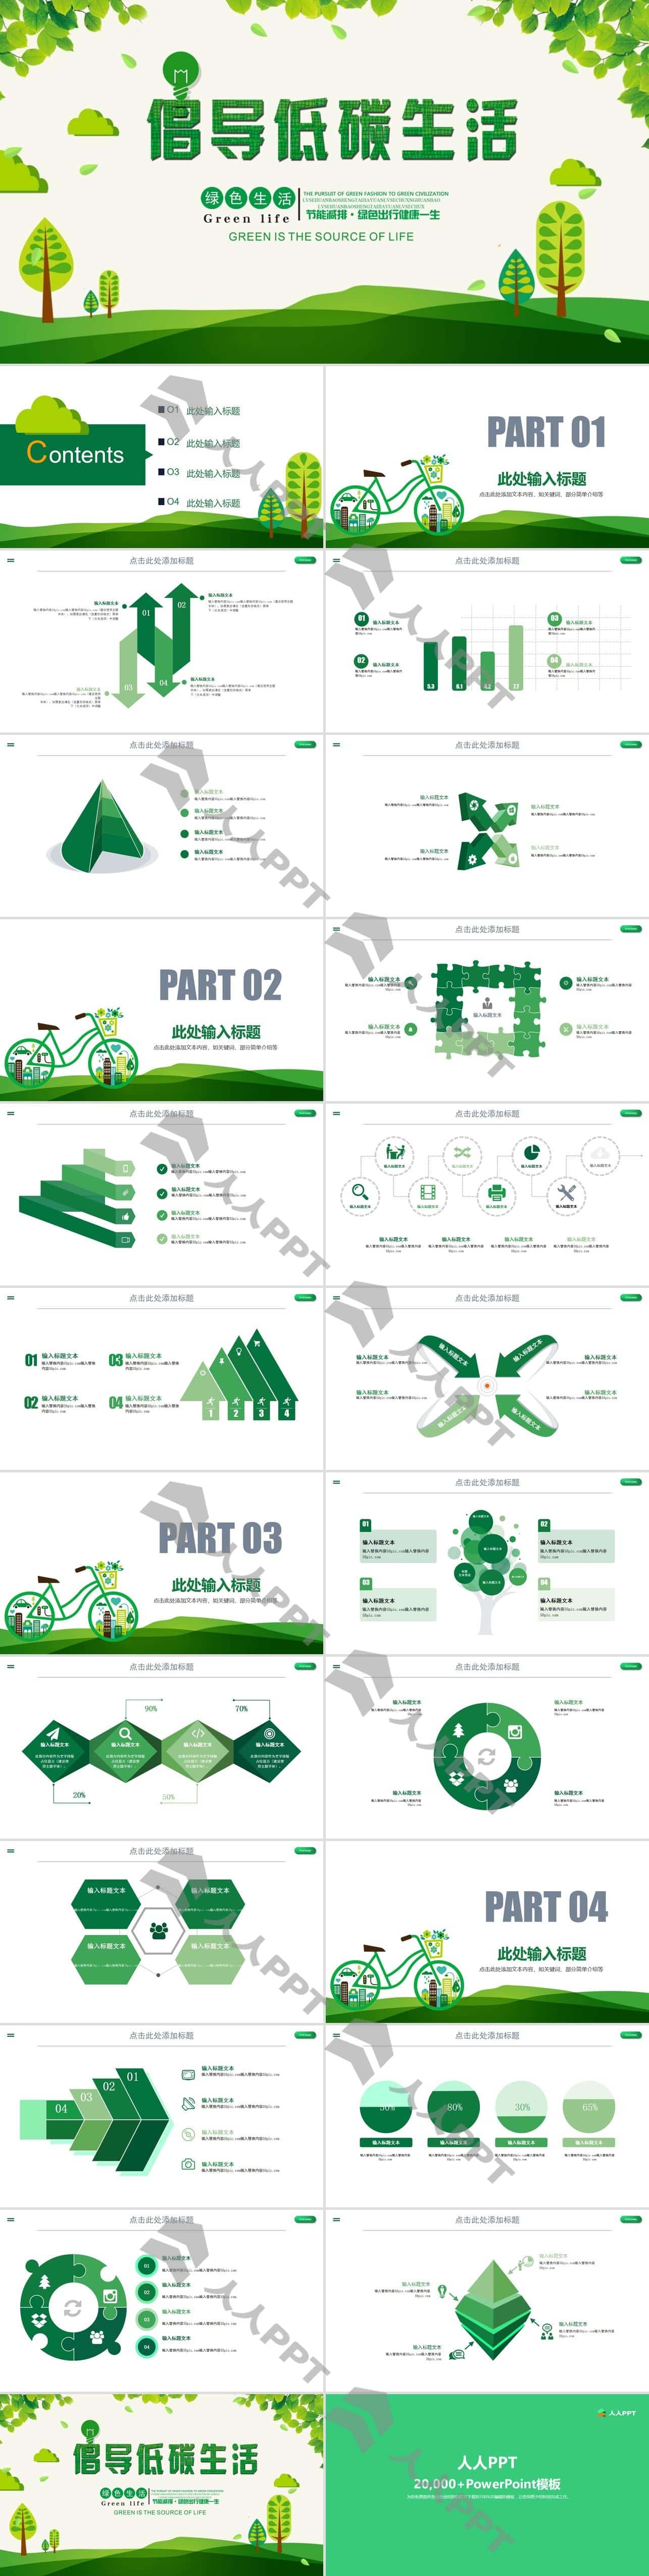 倡导绿色低碳生活PPT模板长图